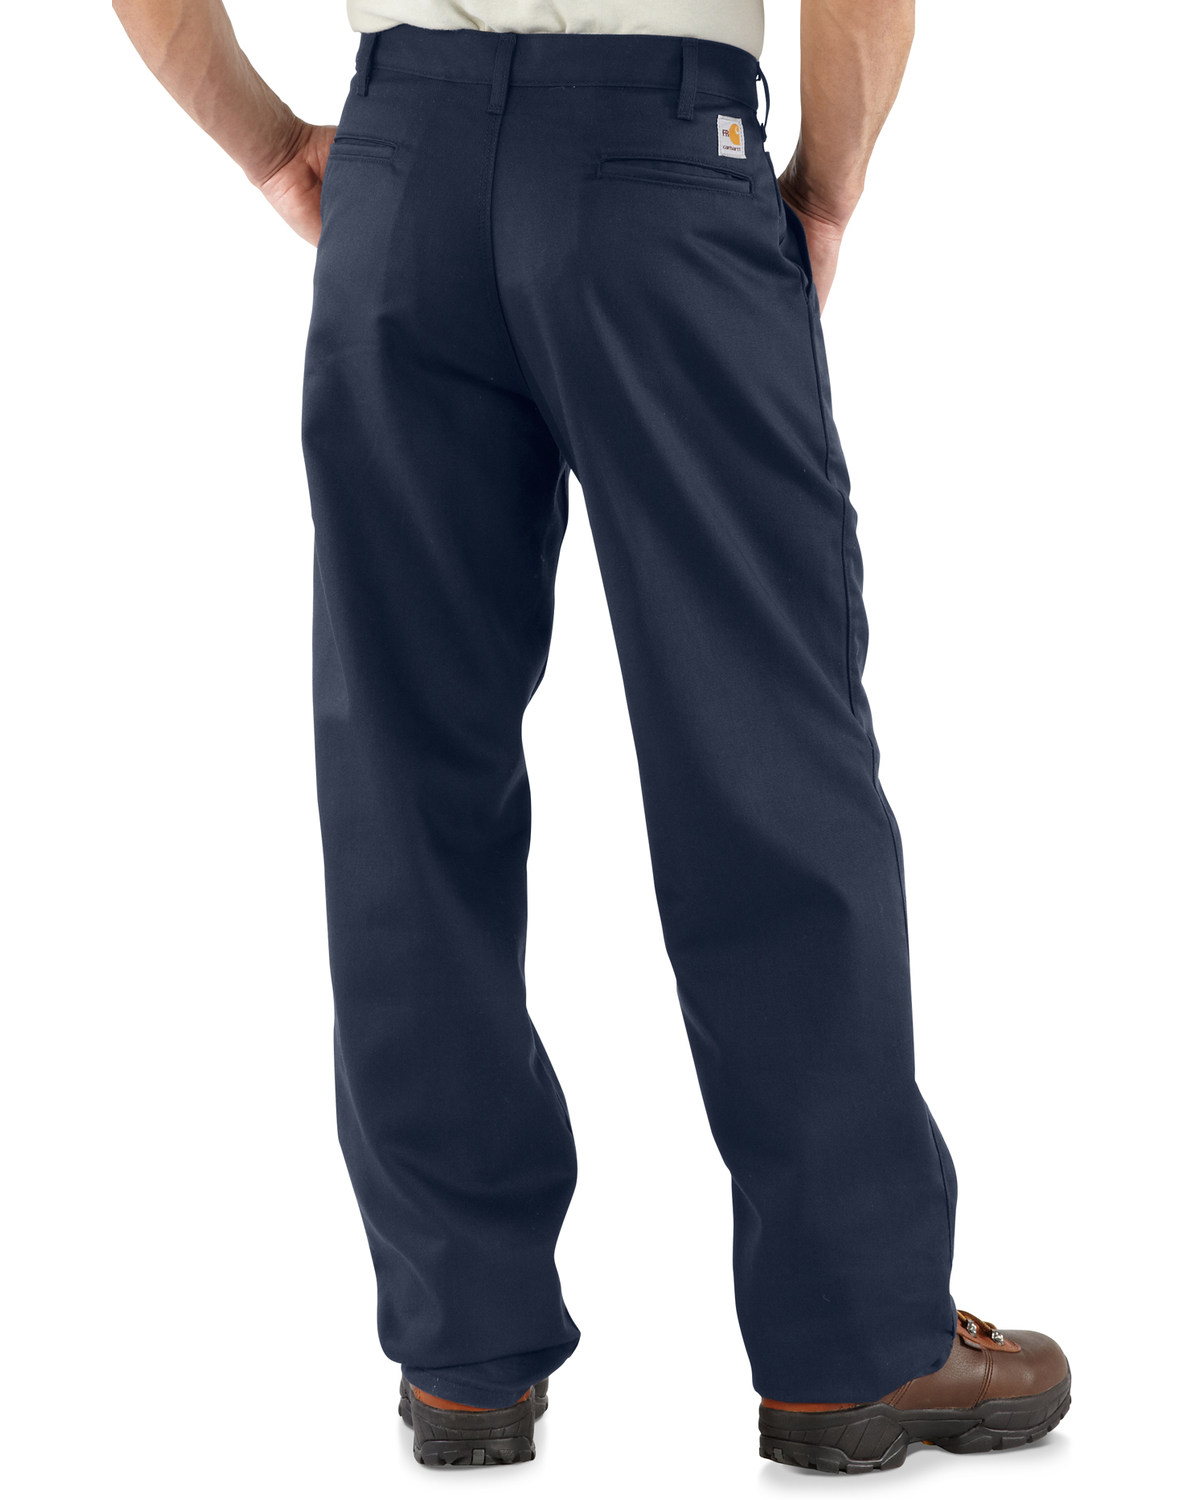 navy blue carhartt work pants